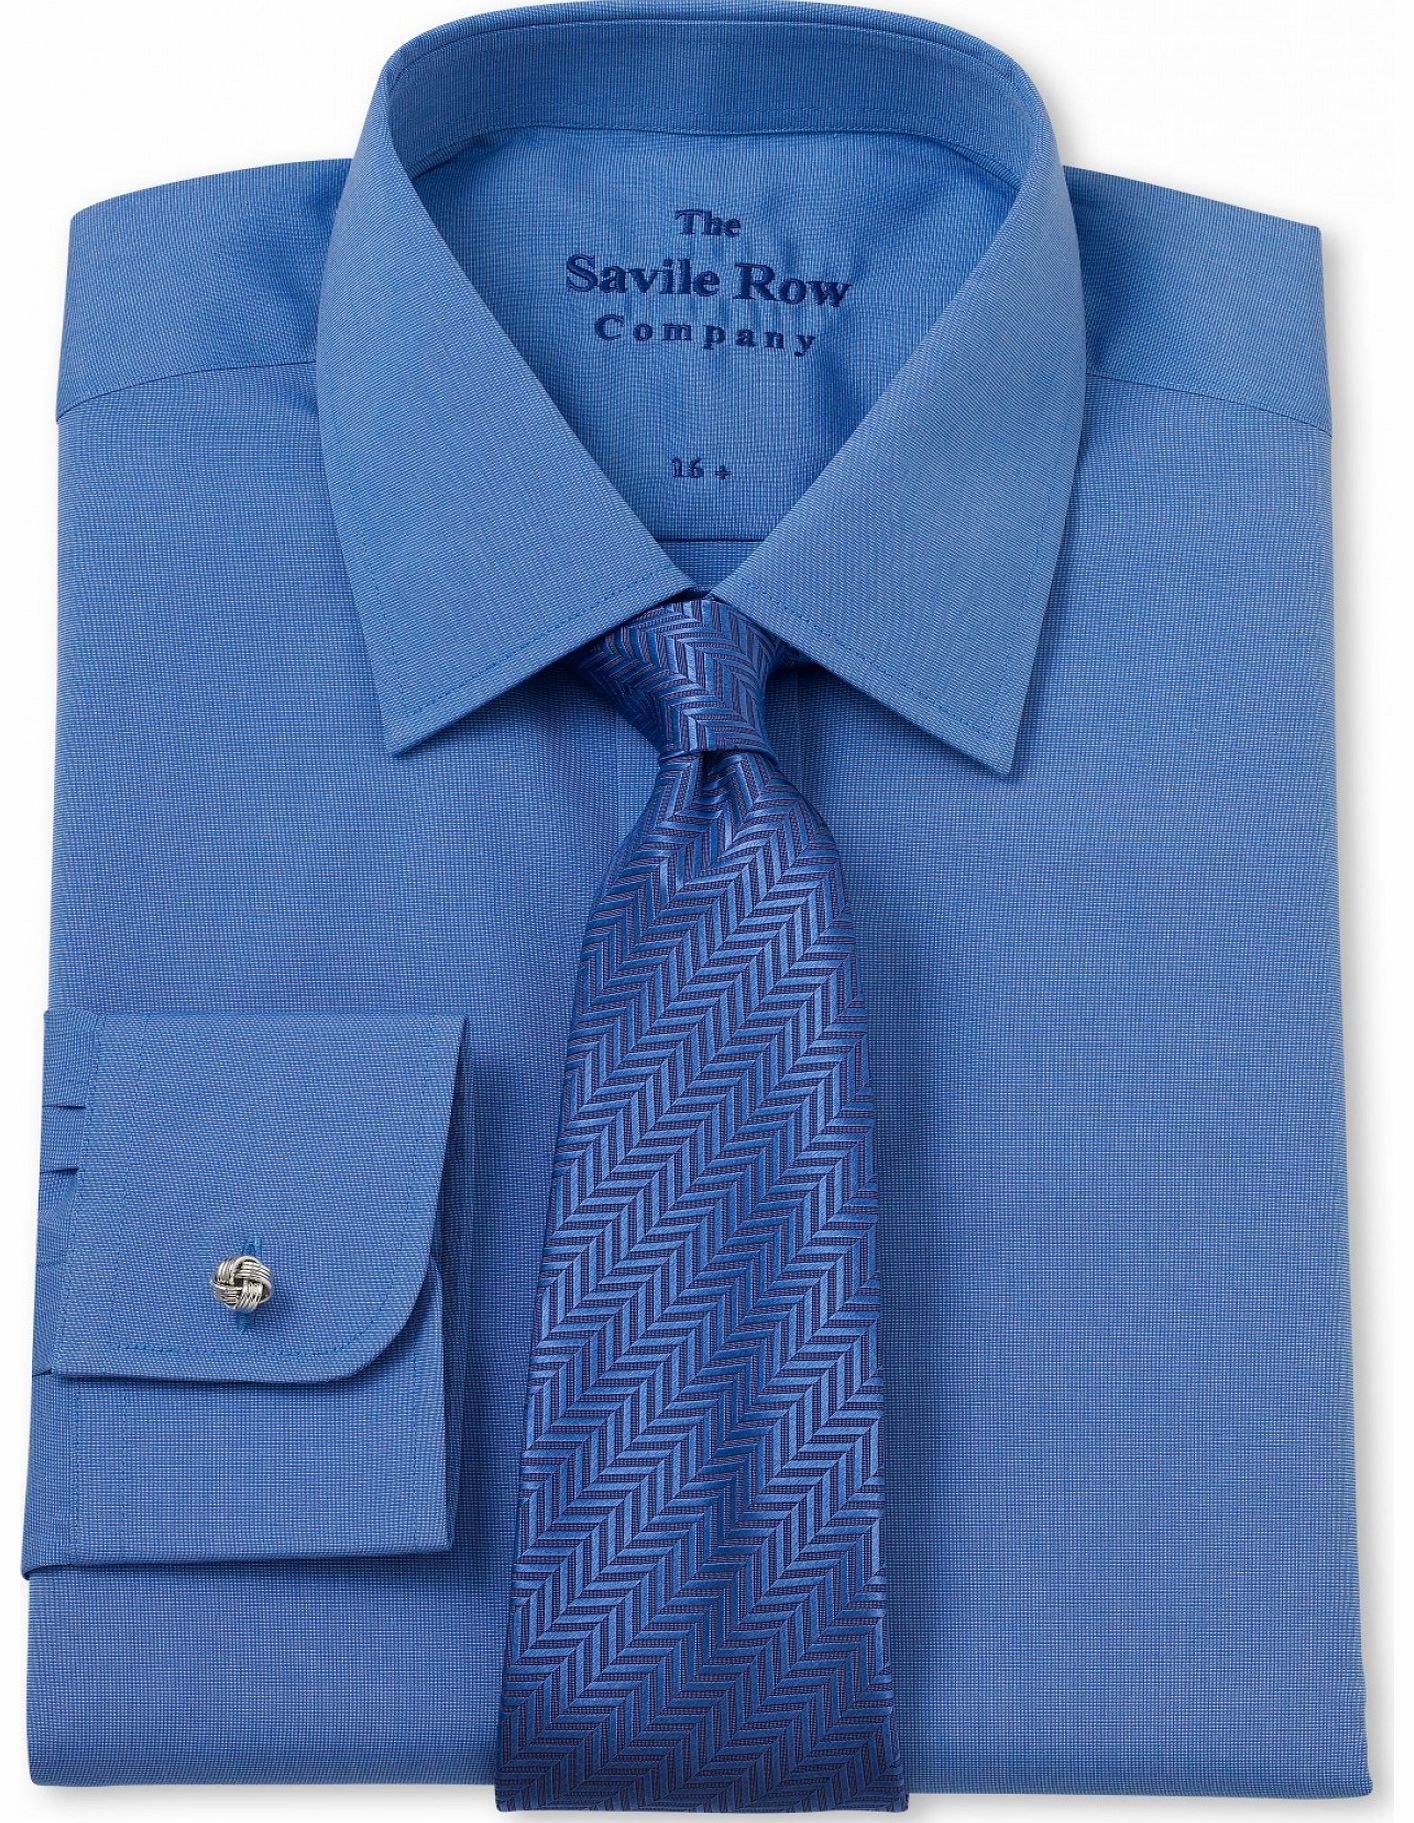 Savile Row Company Blue End on End Slim Fit Shirt 16`` Lengthened